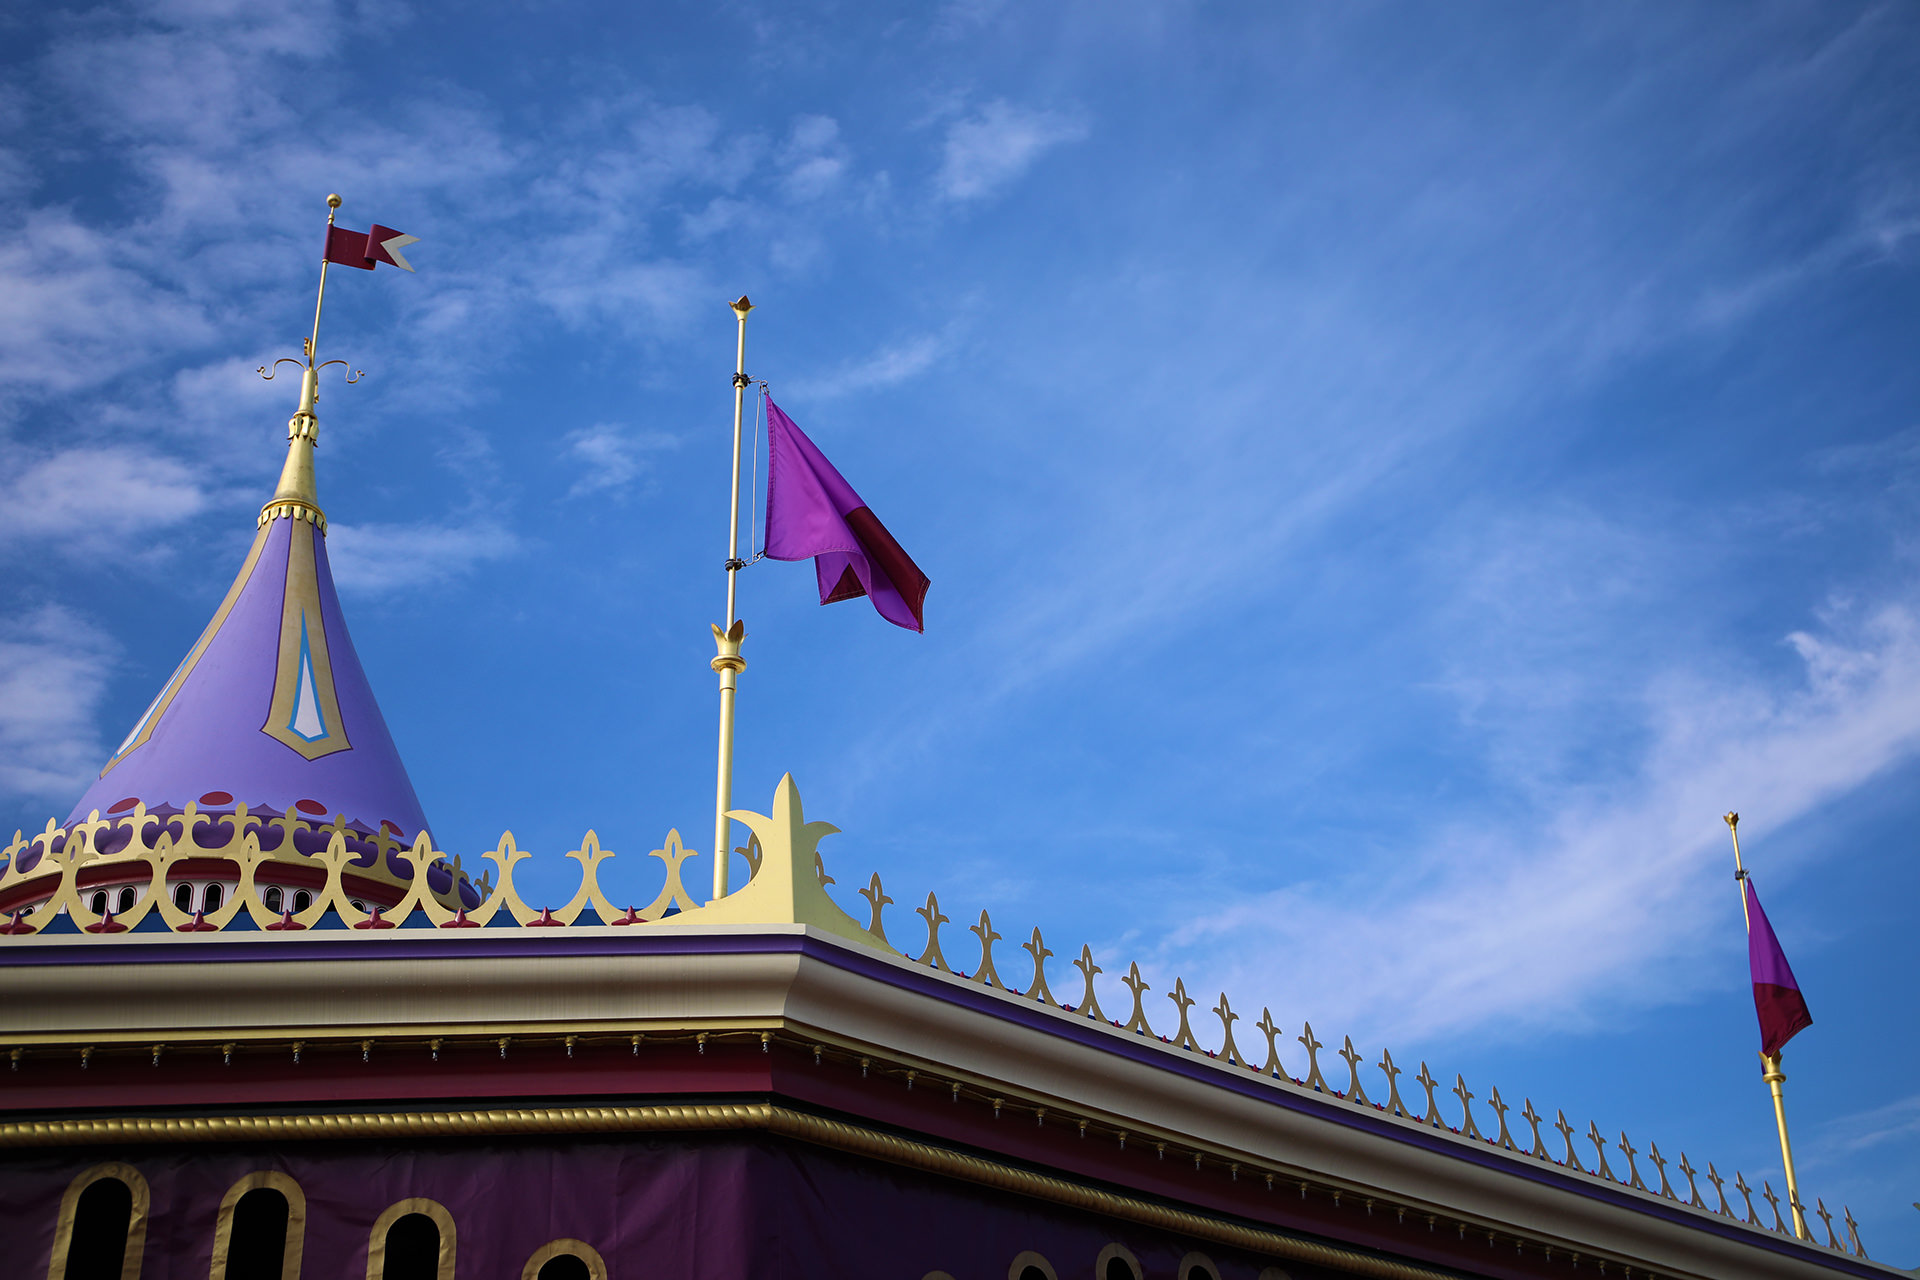 A flag waves atop the carousel in Fantasyland at Disney's Magic Kingdom